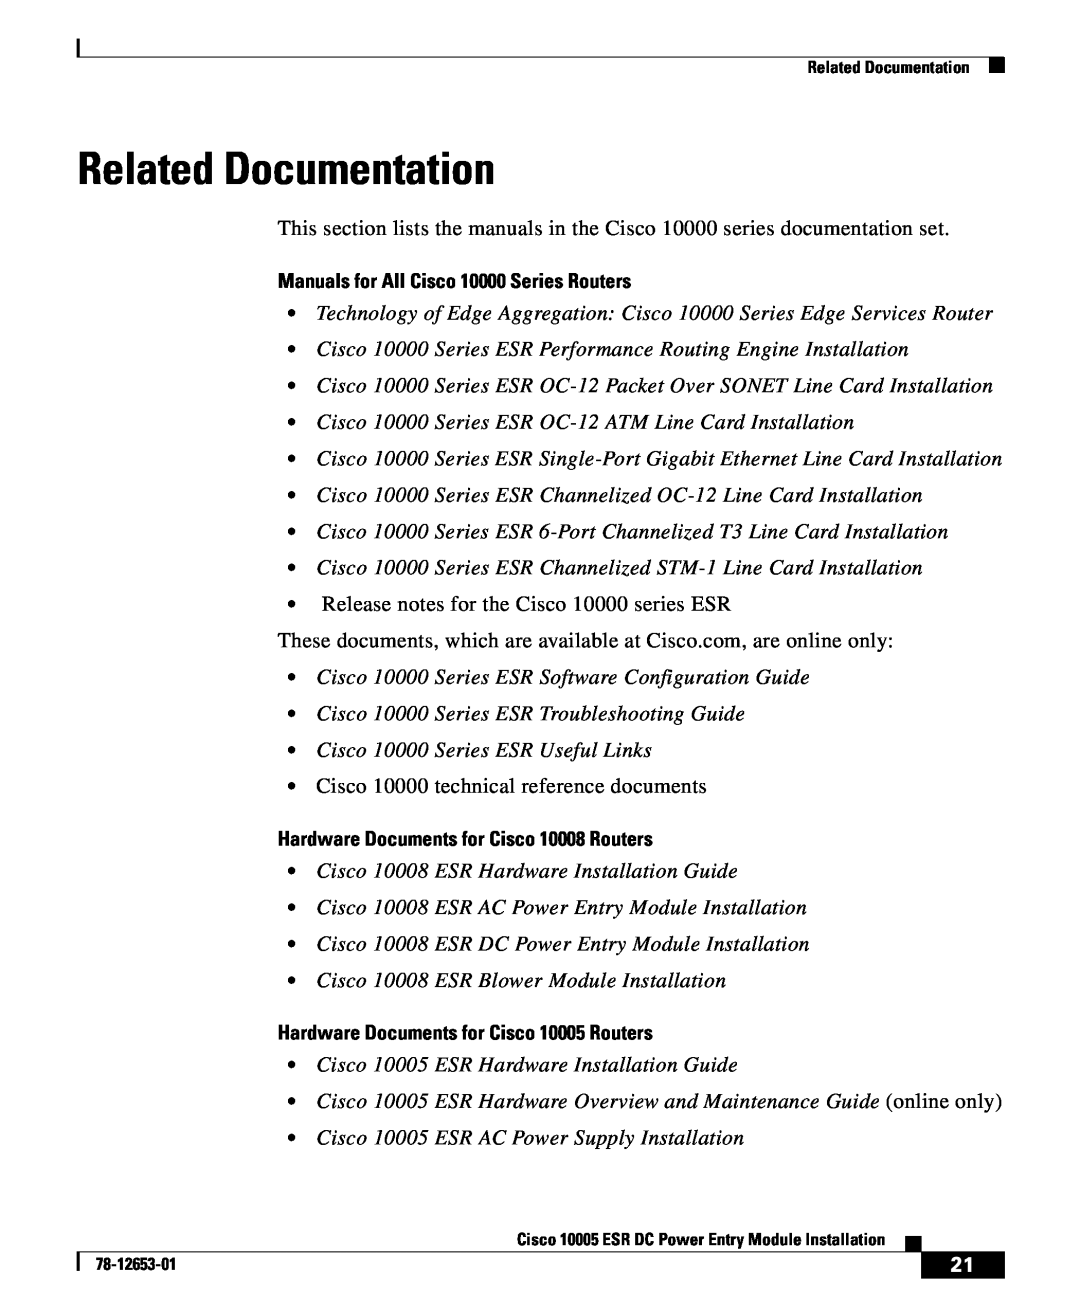 Cisco Systems Cisco 10005 ESR manual Related Documentation, Manuals for All Cisco 10000 Series Routers 